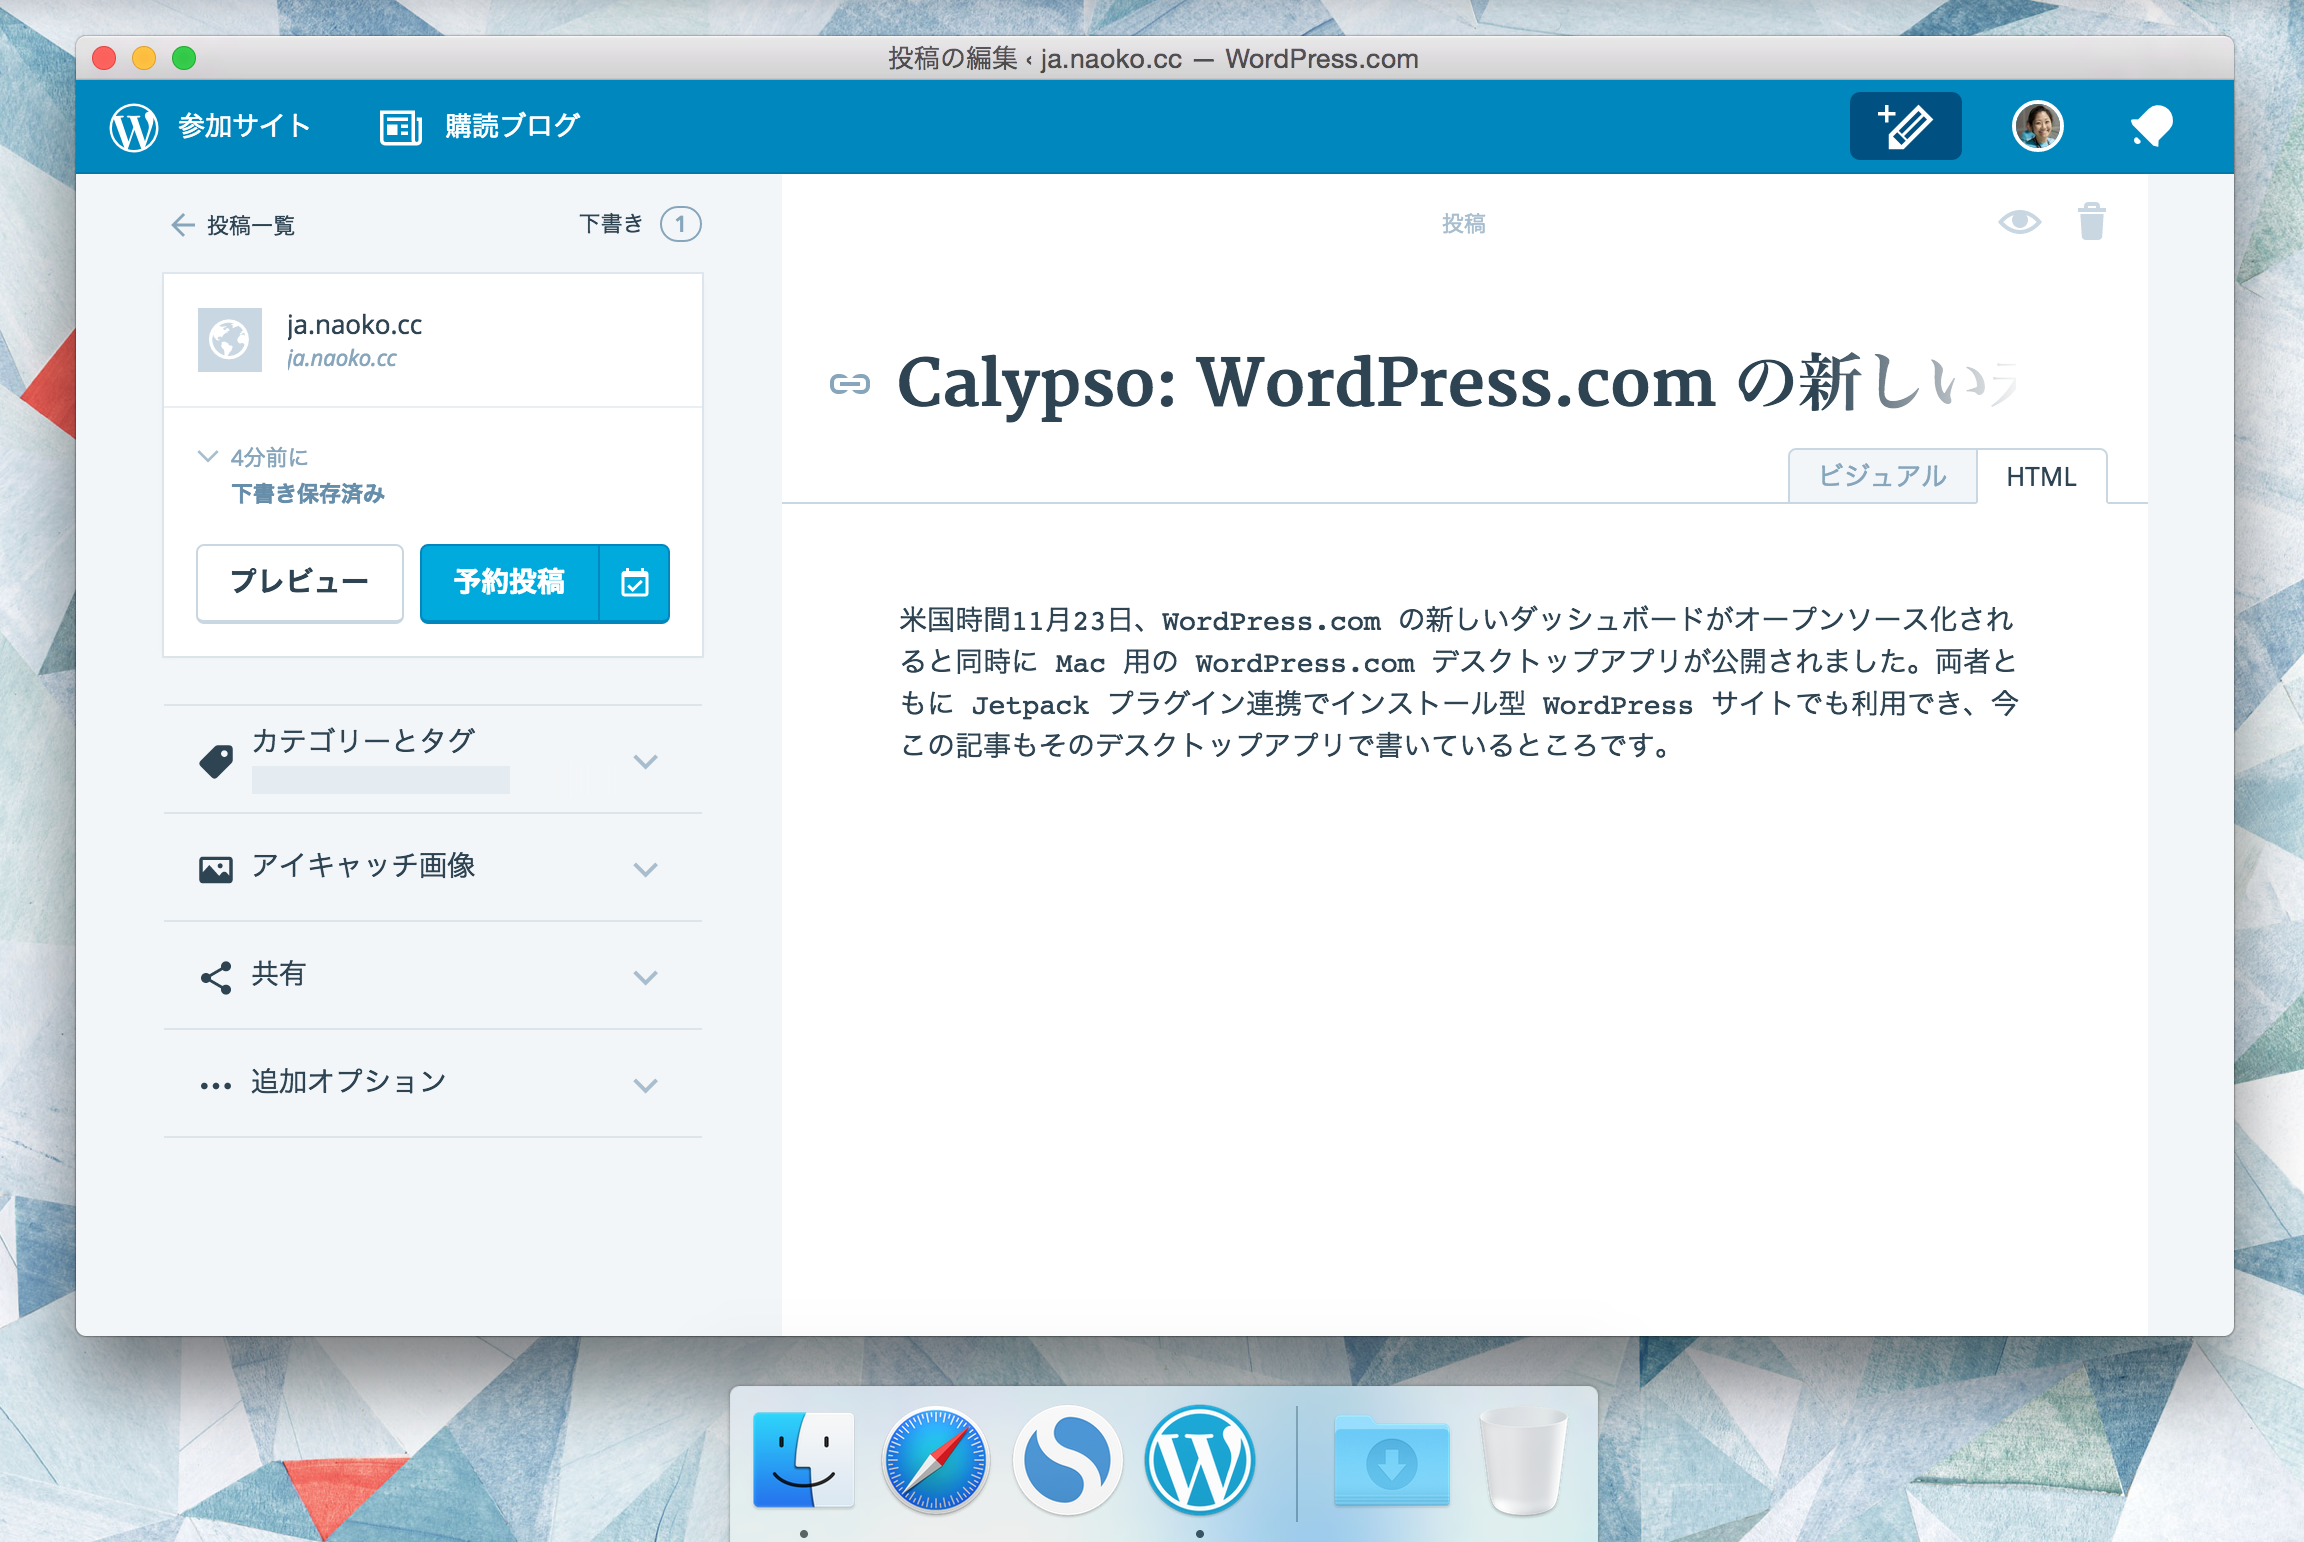 Calypso: WordPress.com の新しい方向性